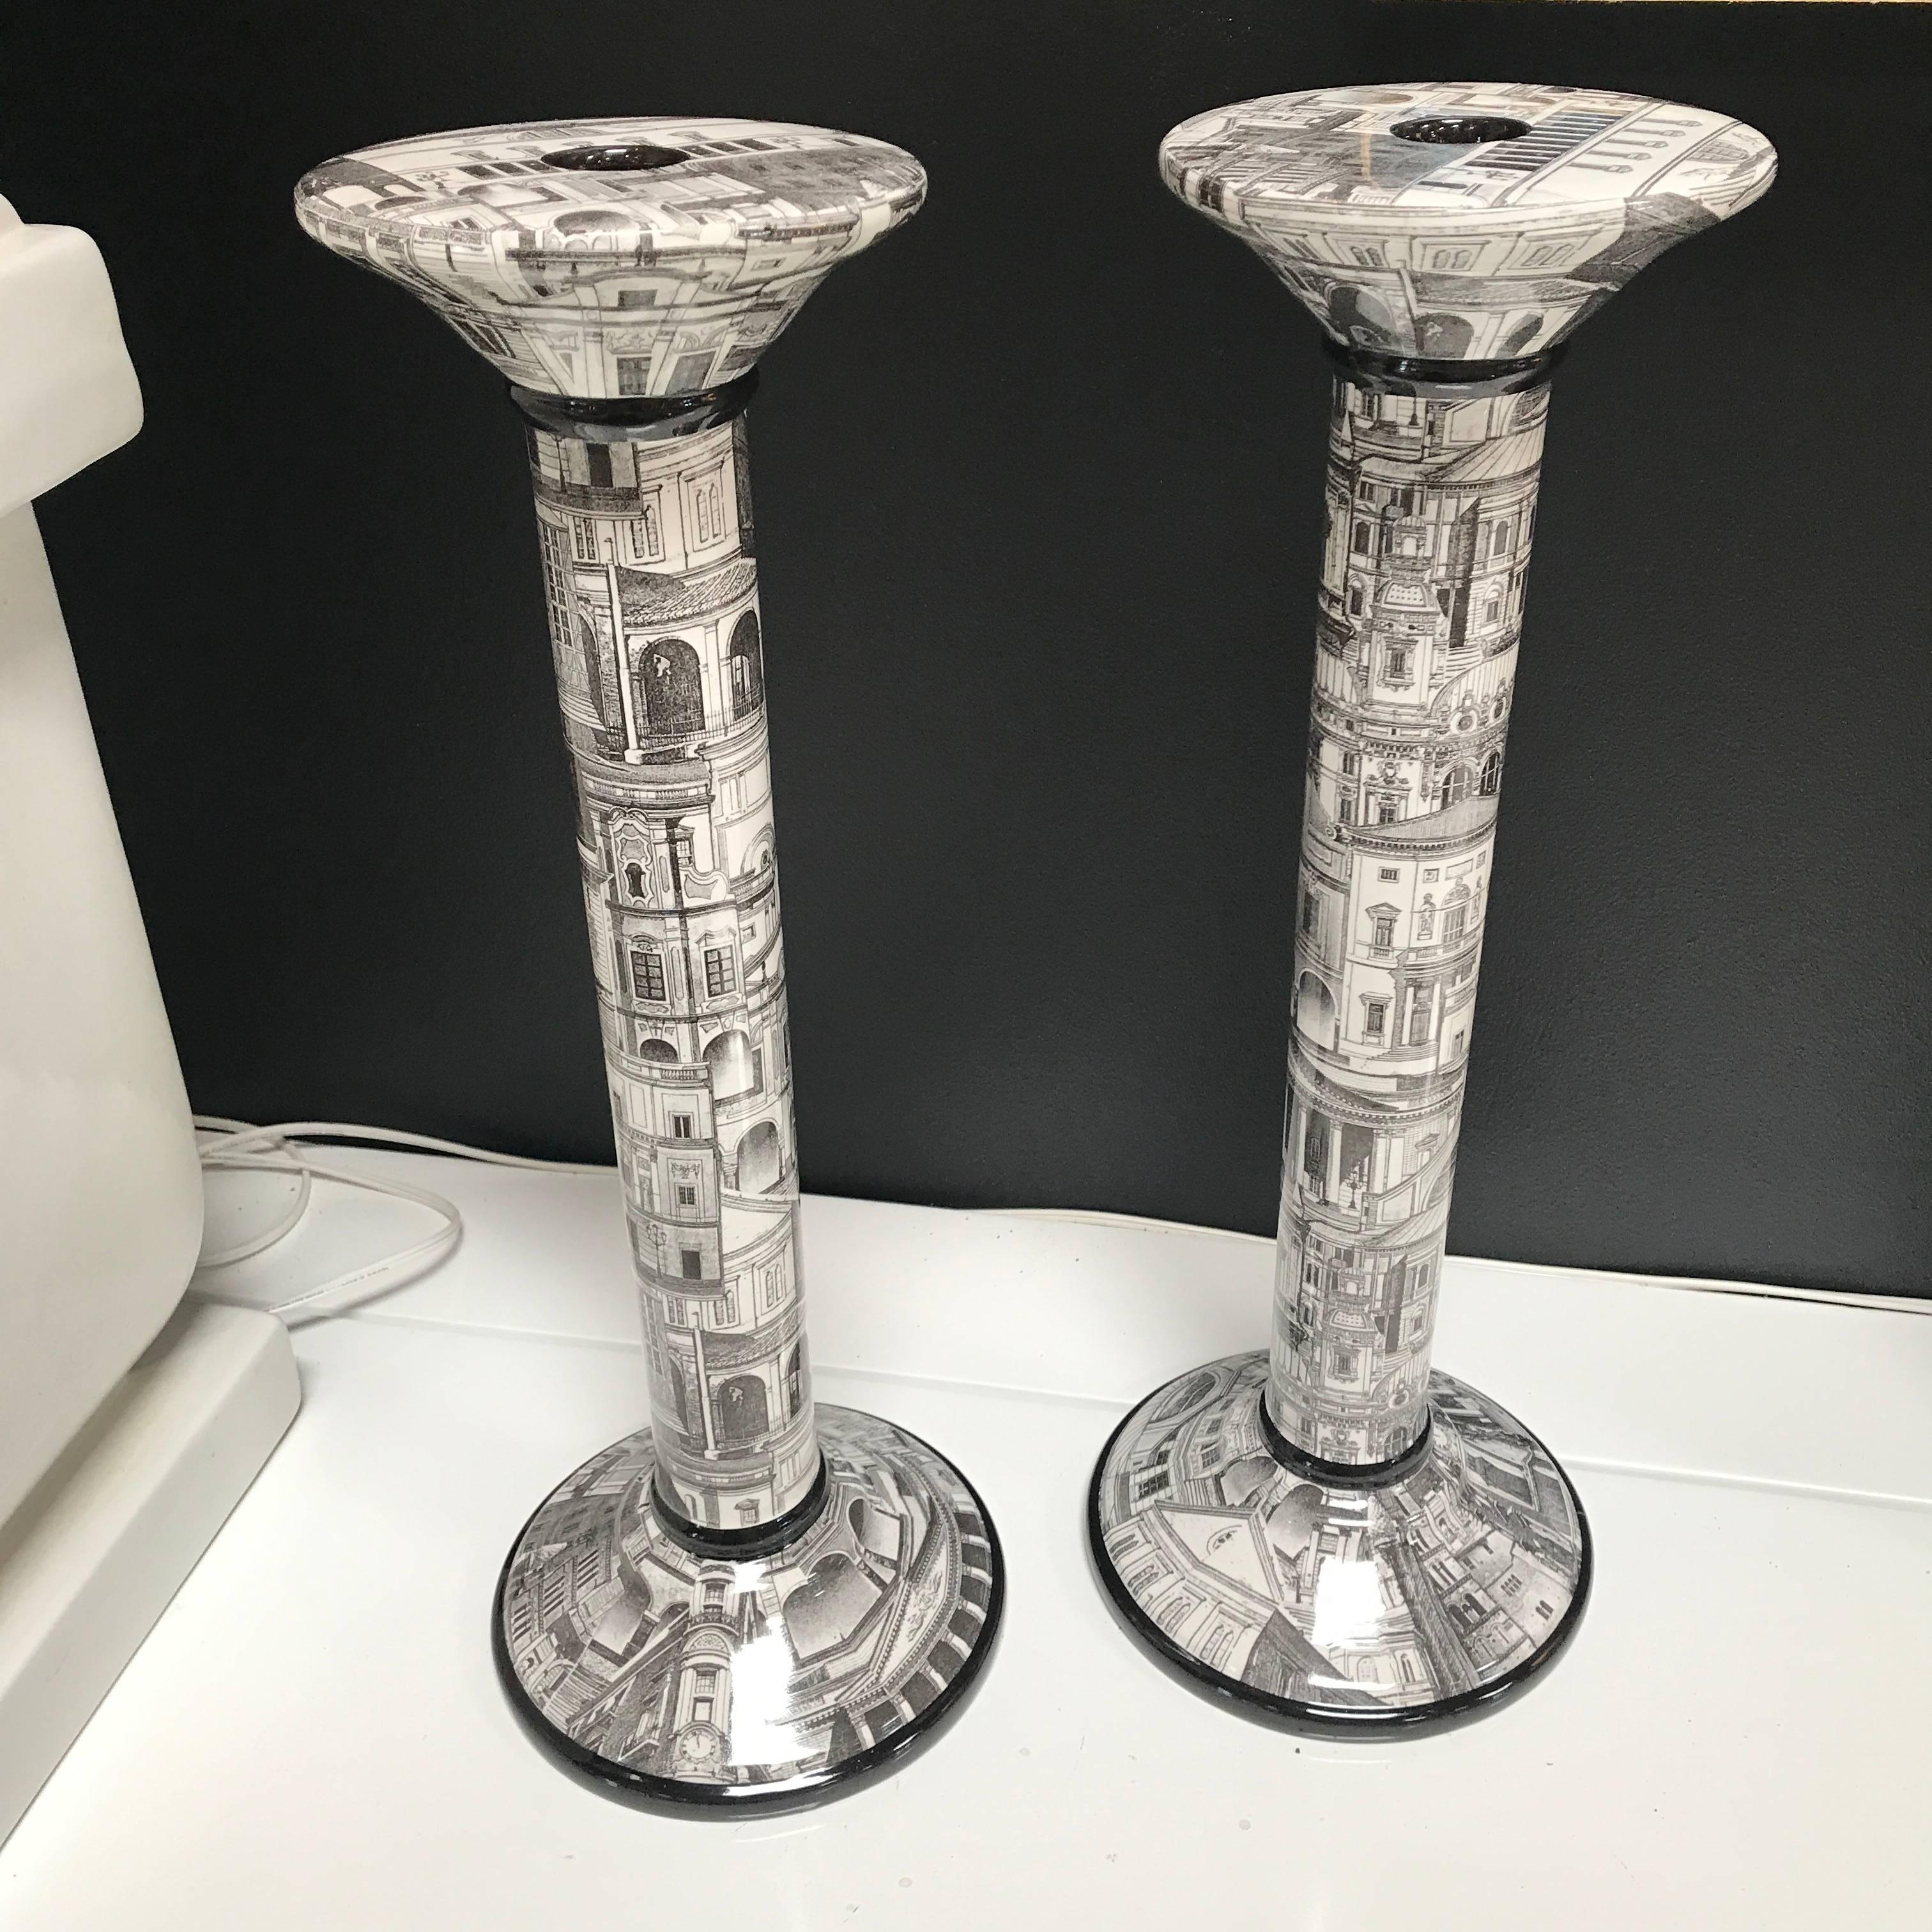 Italian 1960s black and white pair of candlesticks.
Ceramic.